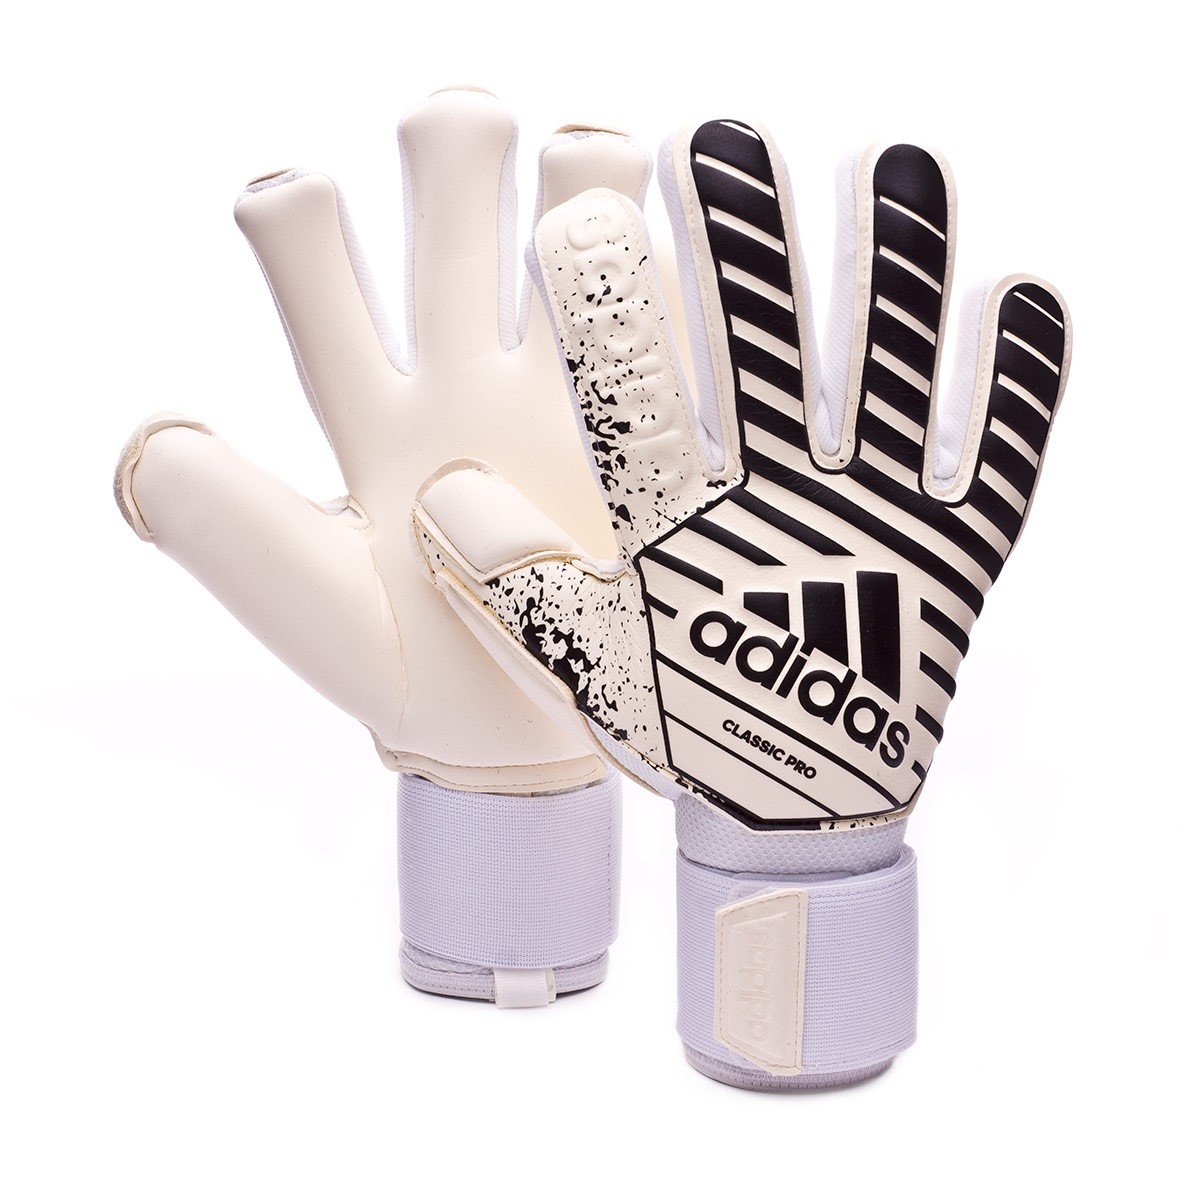 adidas goalkeeper gloves classic pro